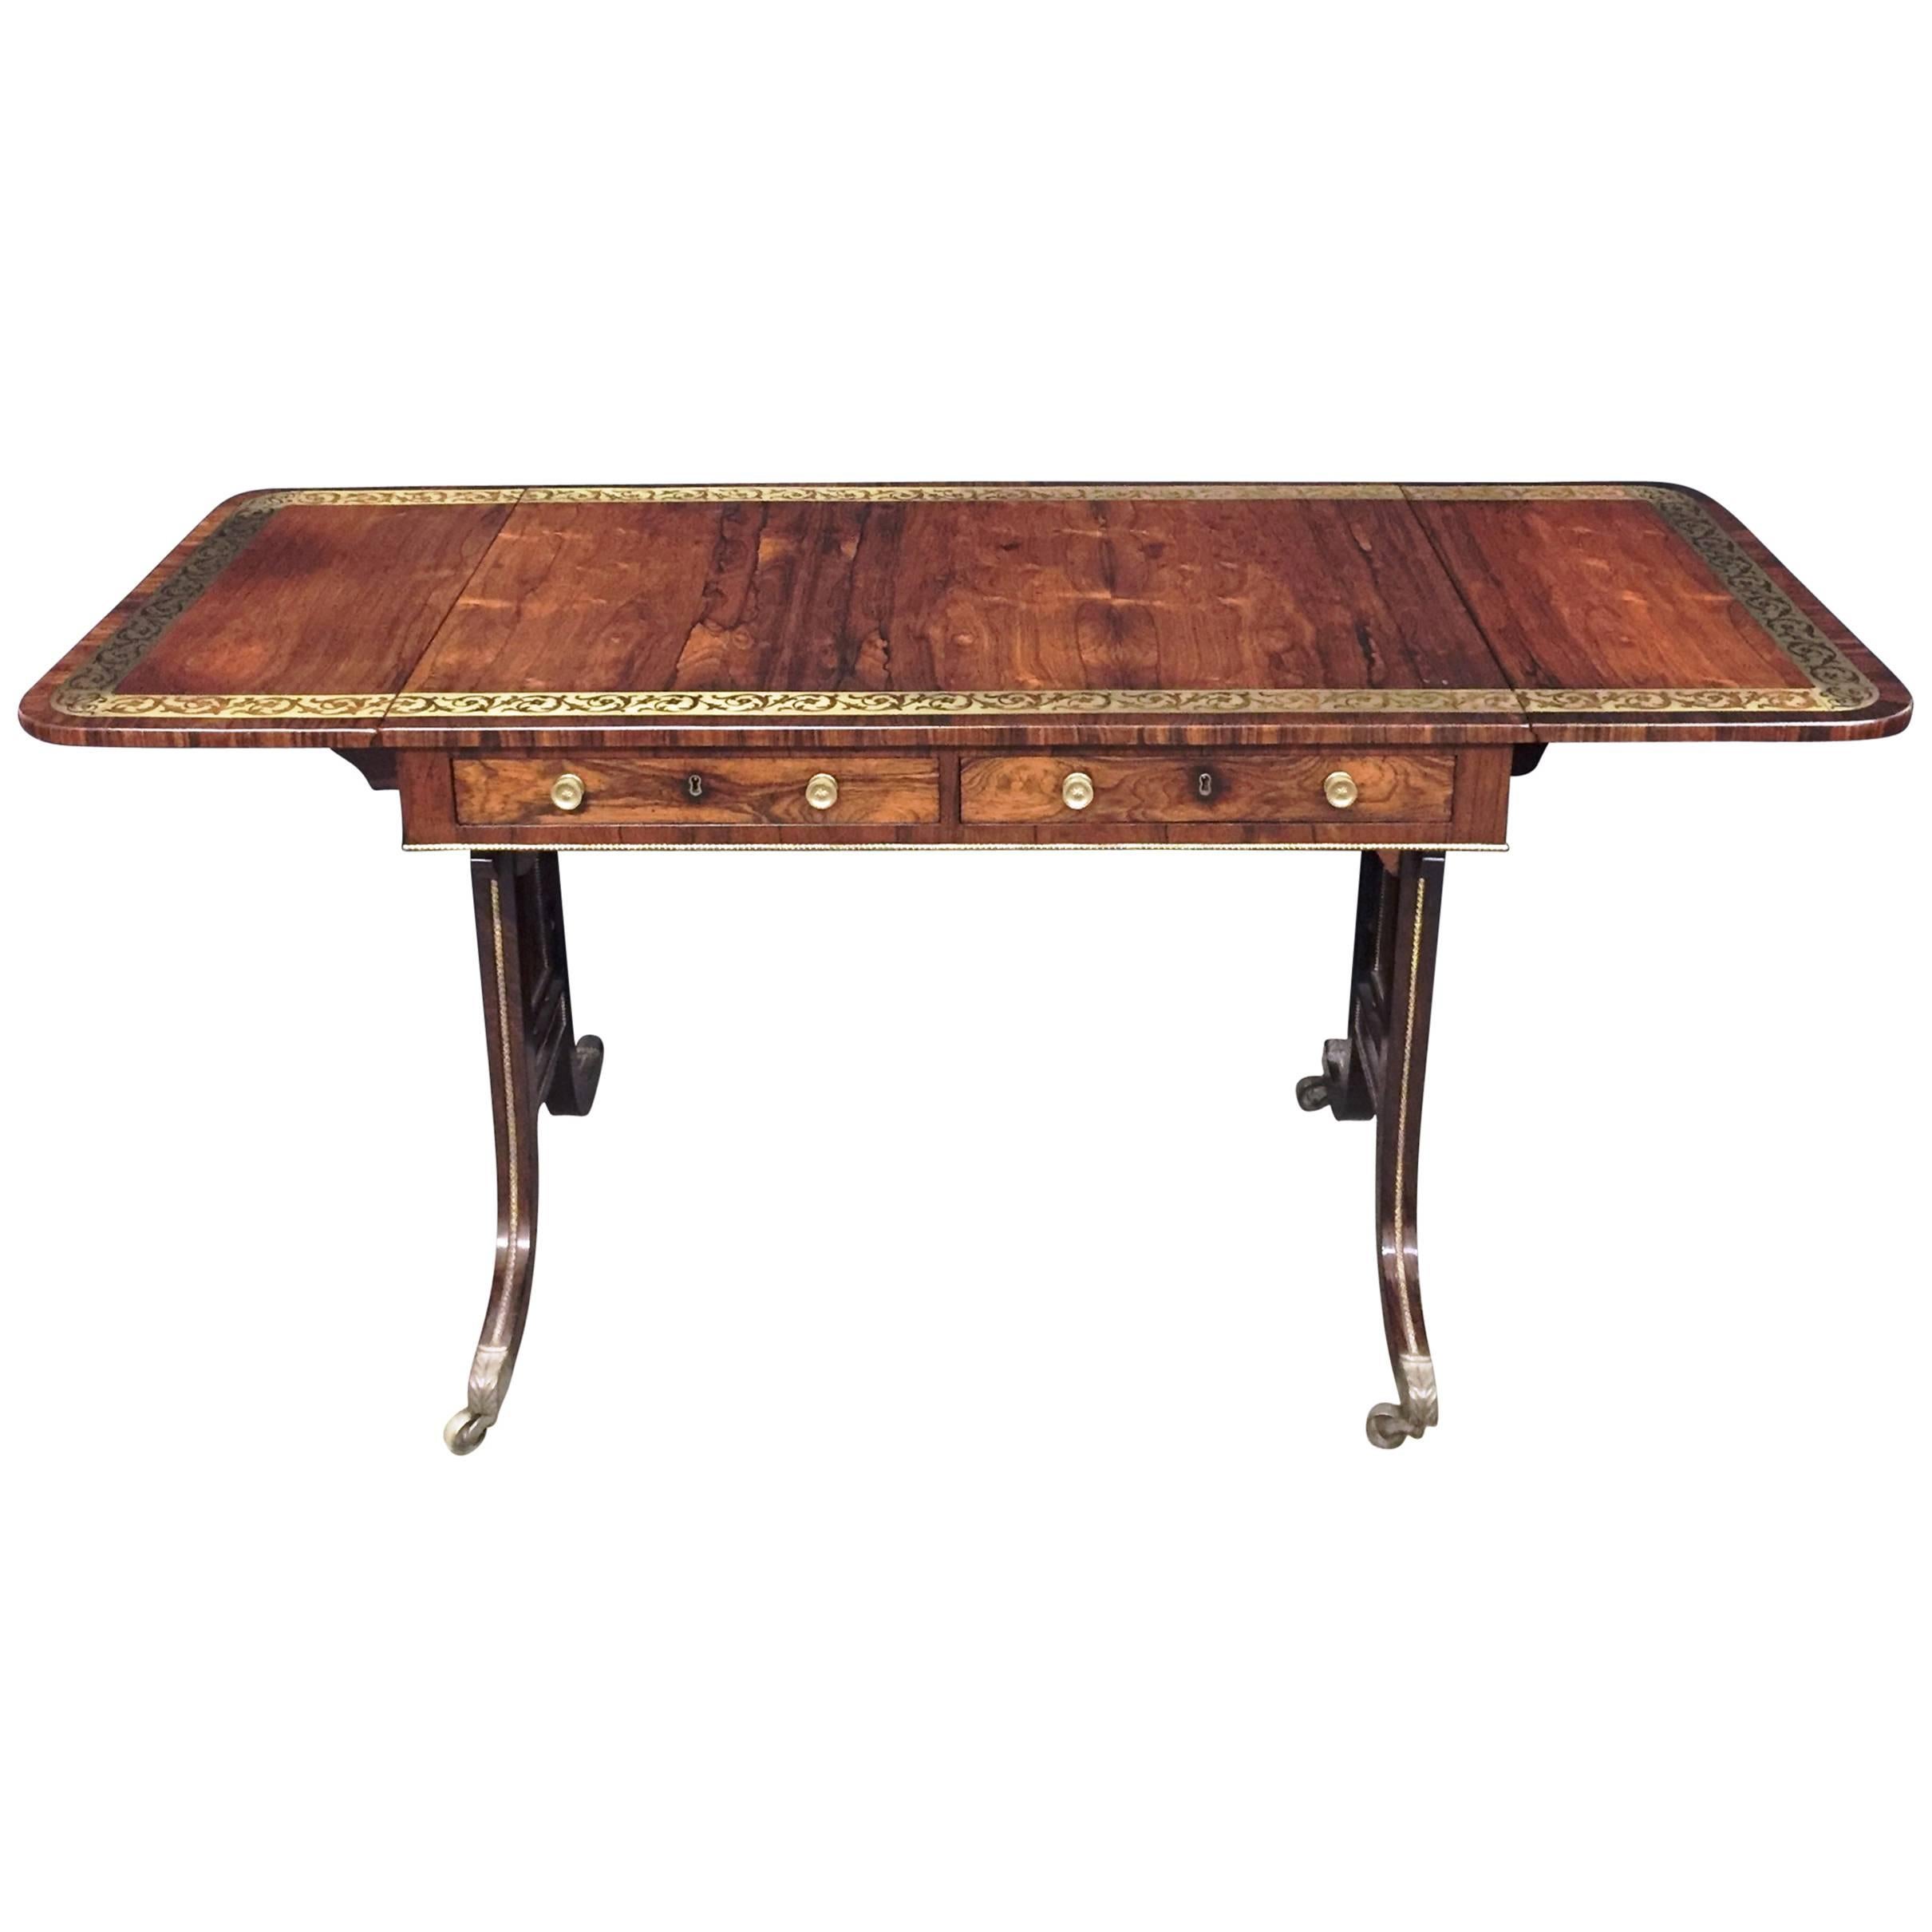 Regency Period, Brass Inlaid Sofa Table